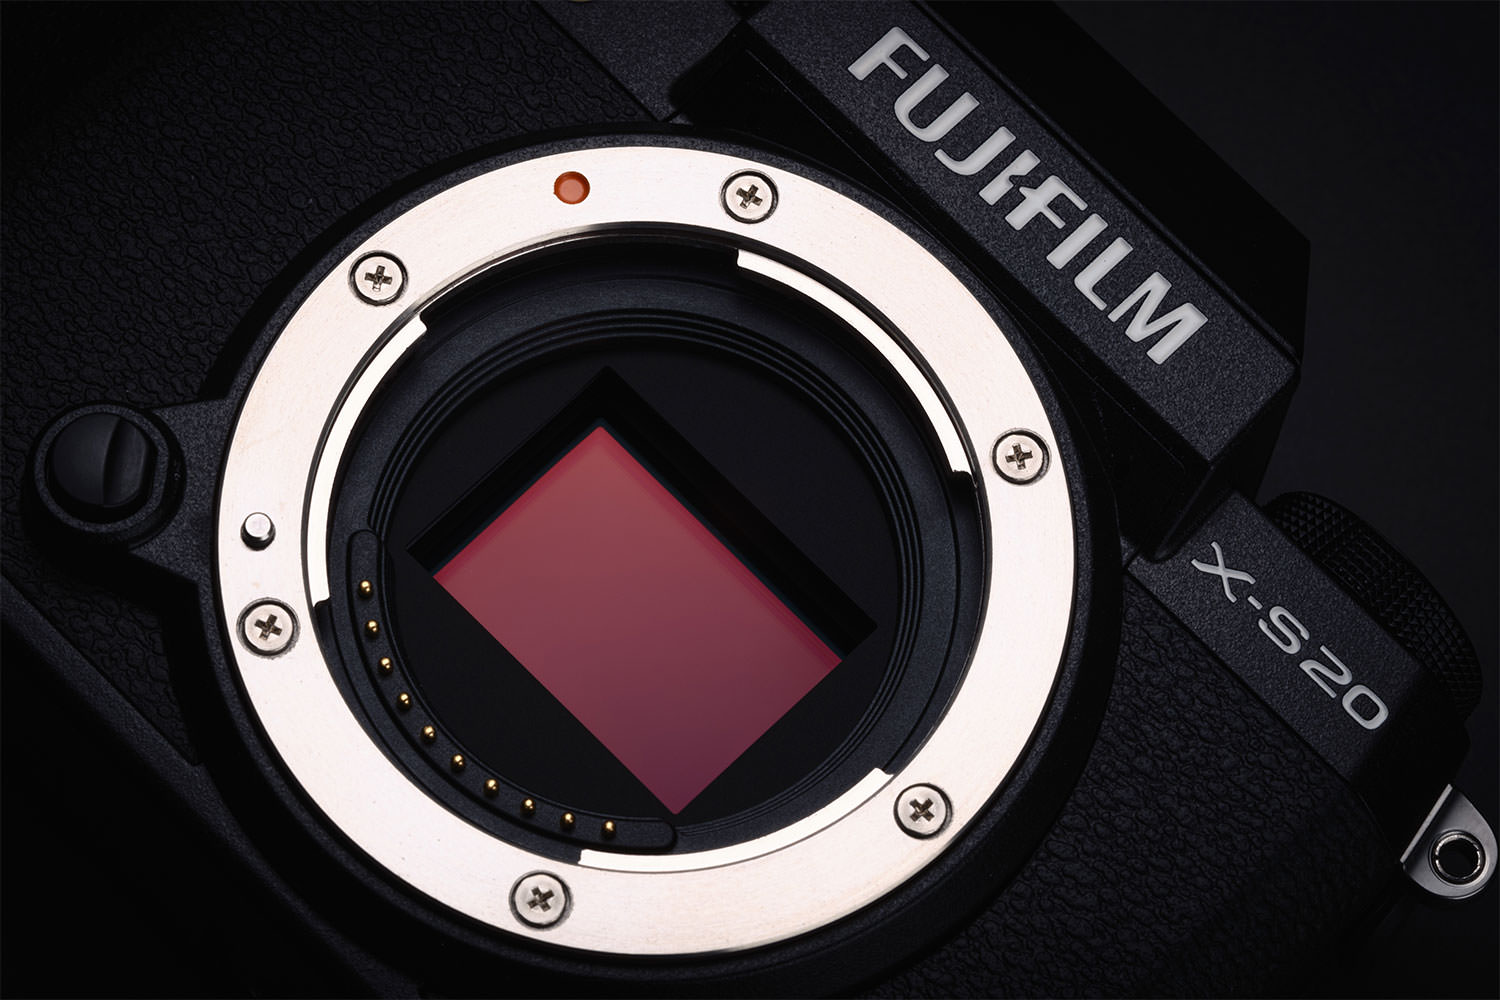 FUJIFILM X-S20, Cameras